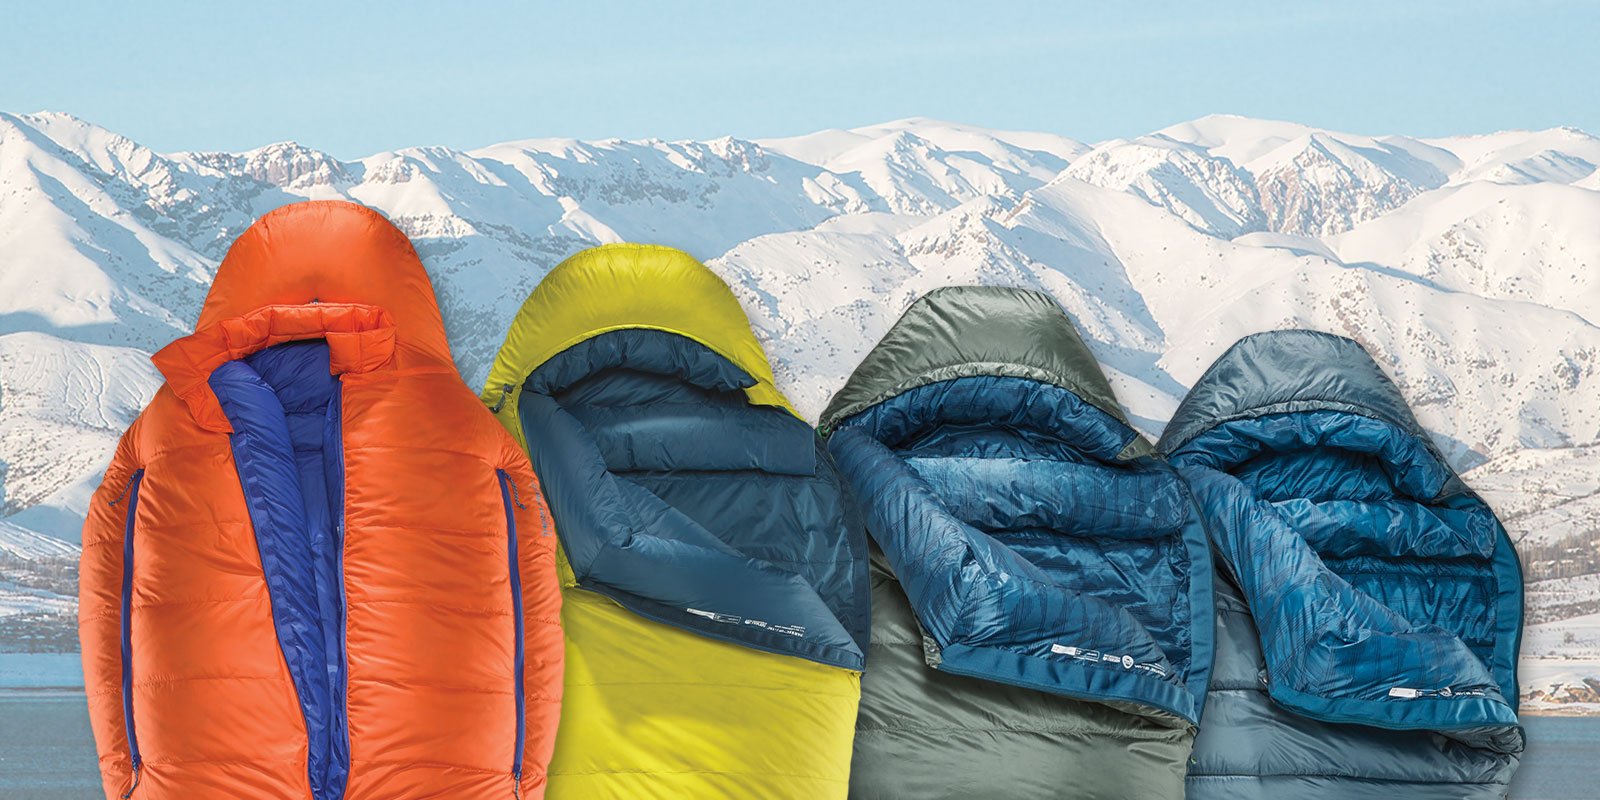 Breathing tube, venting 'Gills' among features on Winter sleeping bag |  GearJunkie